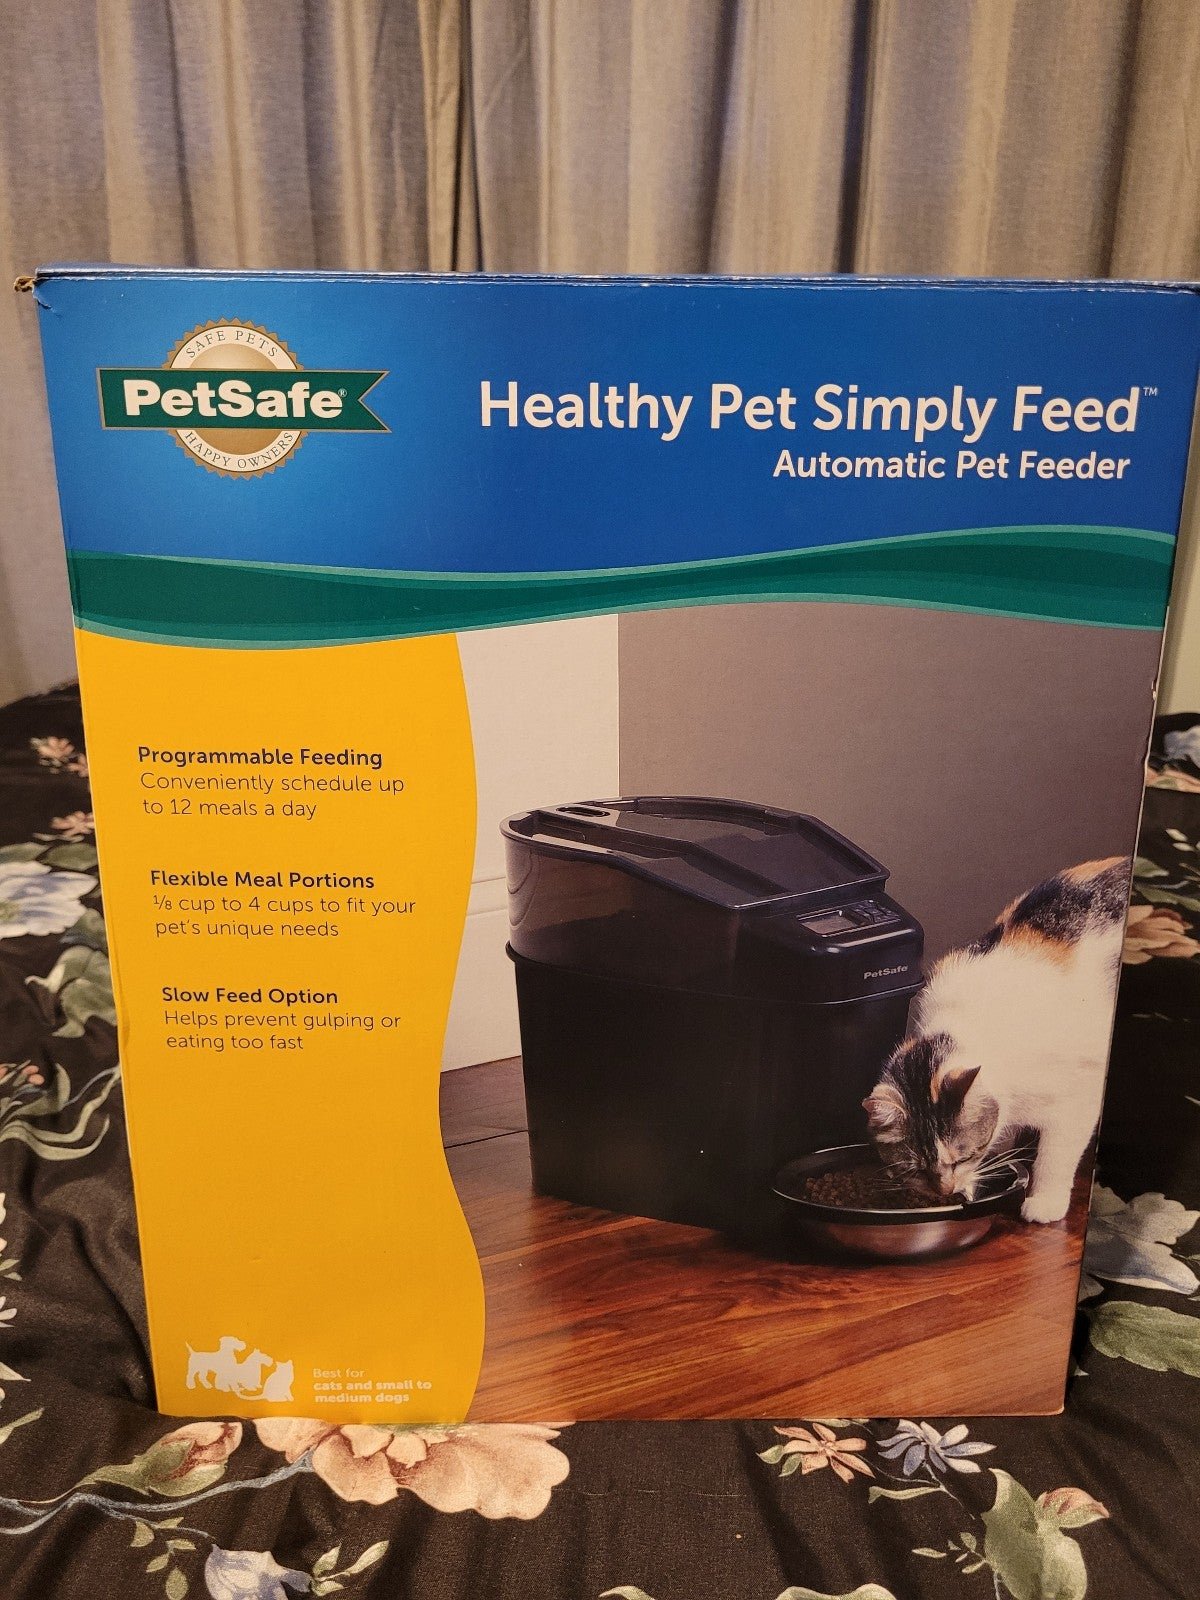 Petsafe automatic pet feeder 0WsK1NWx9